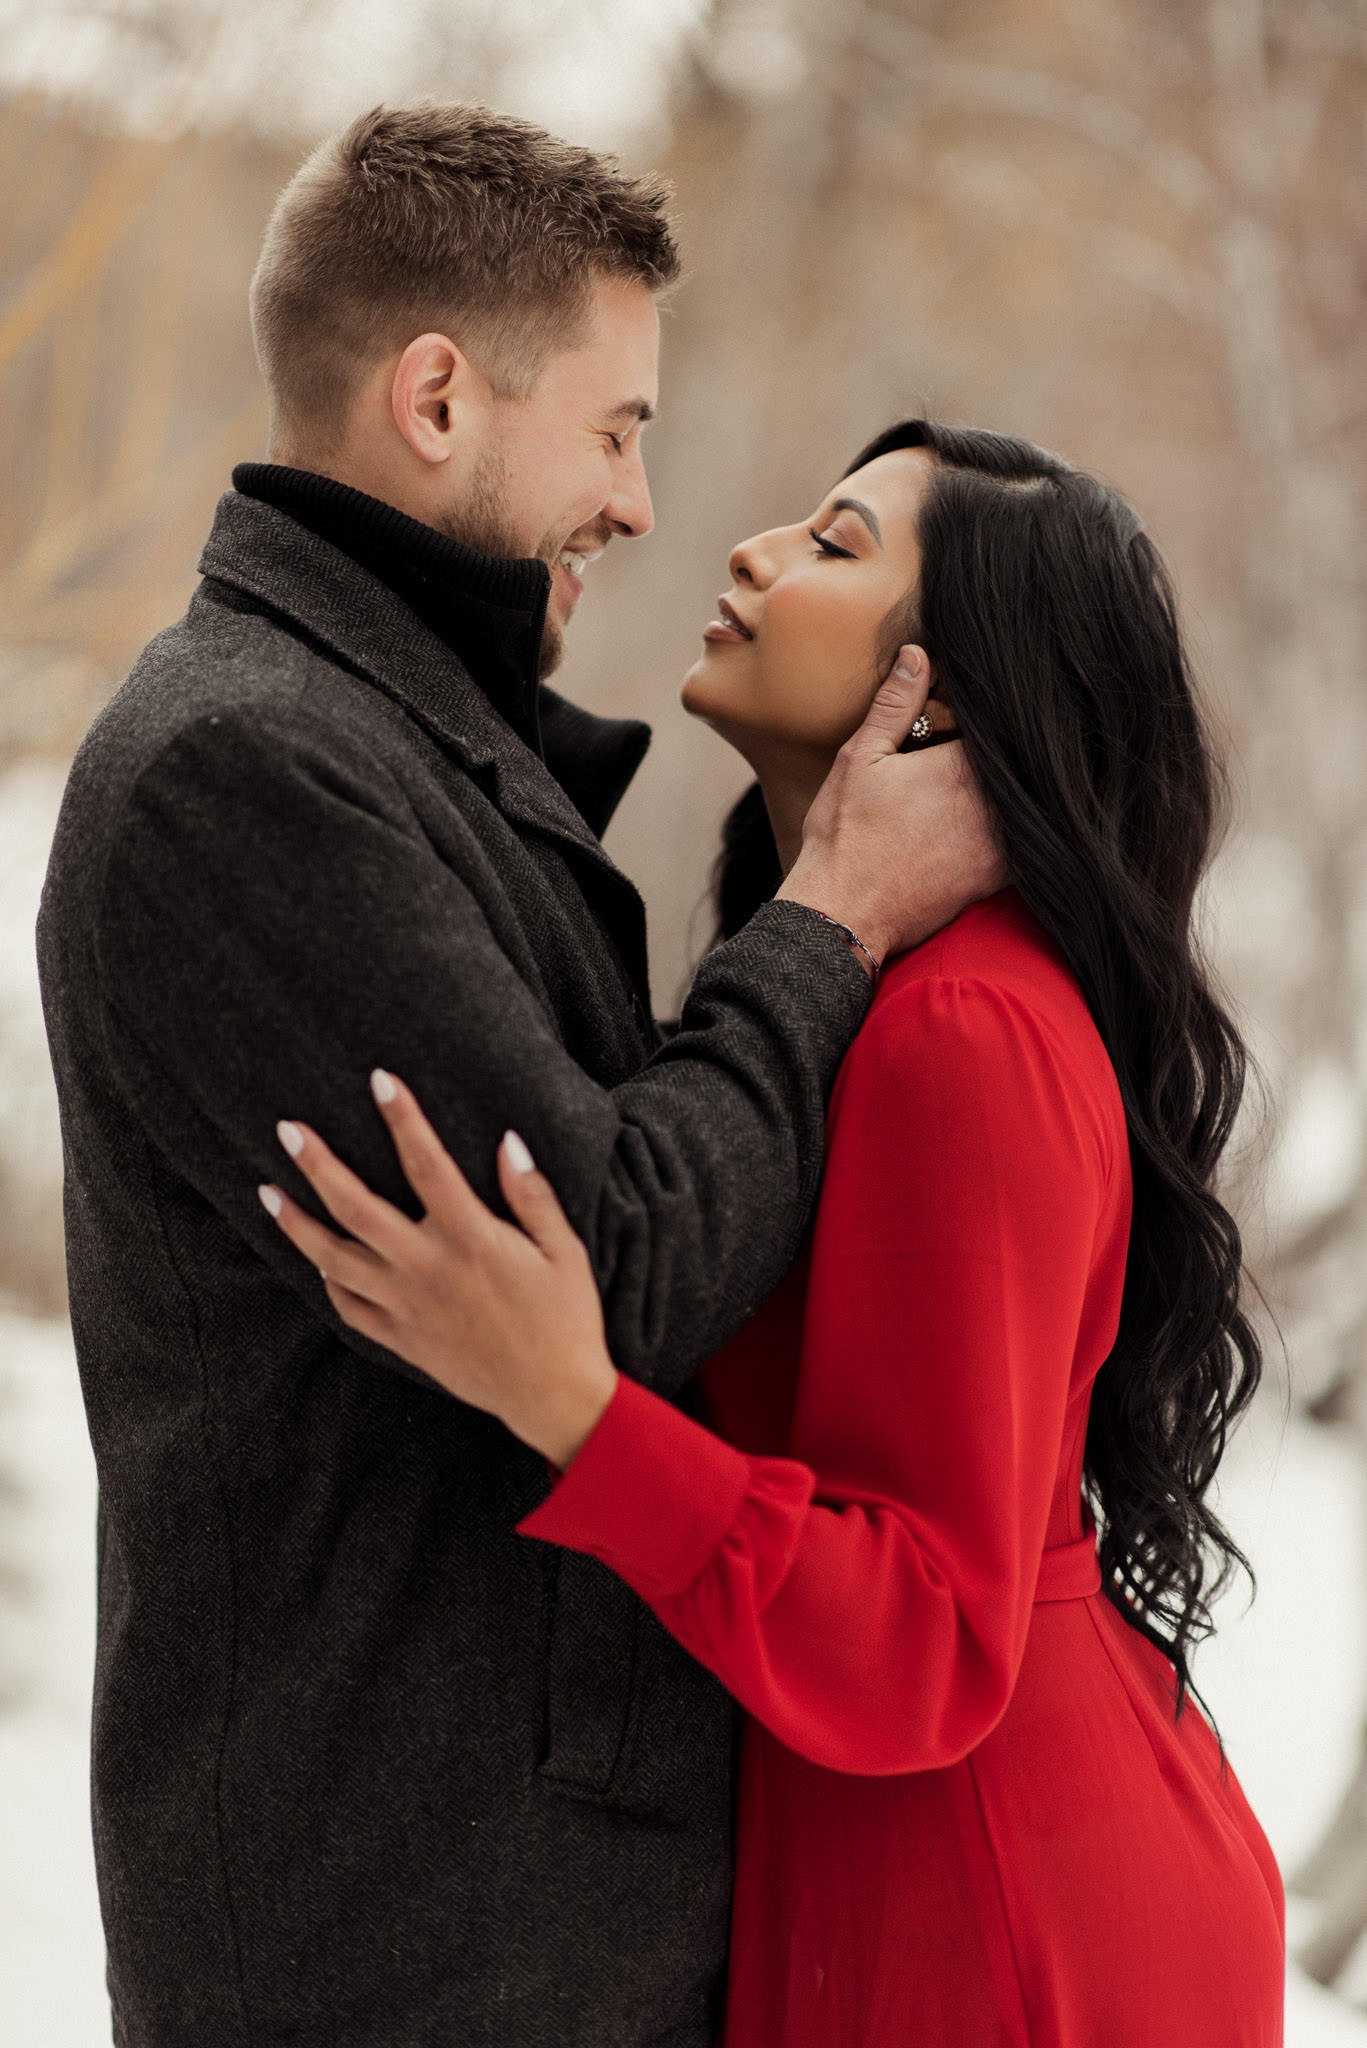 sandra-ryan-colorado-winter-snow-engagement-couples-valentines-red-houston-photographer-sm-4.jpg